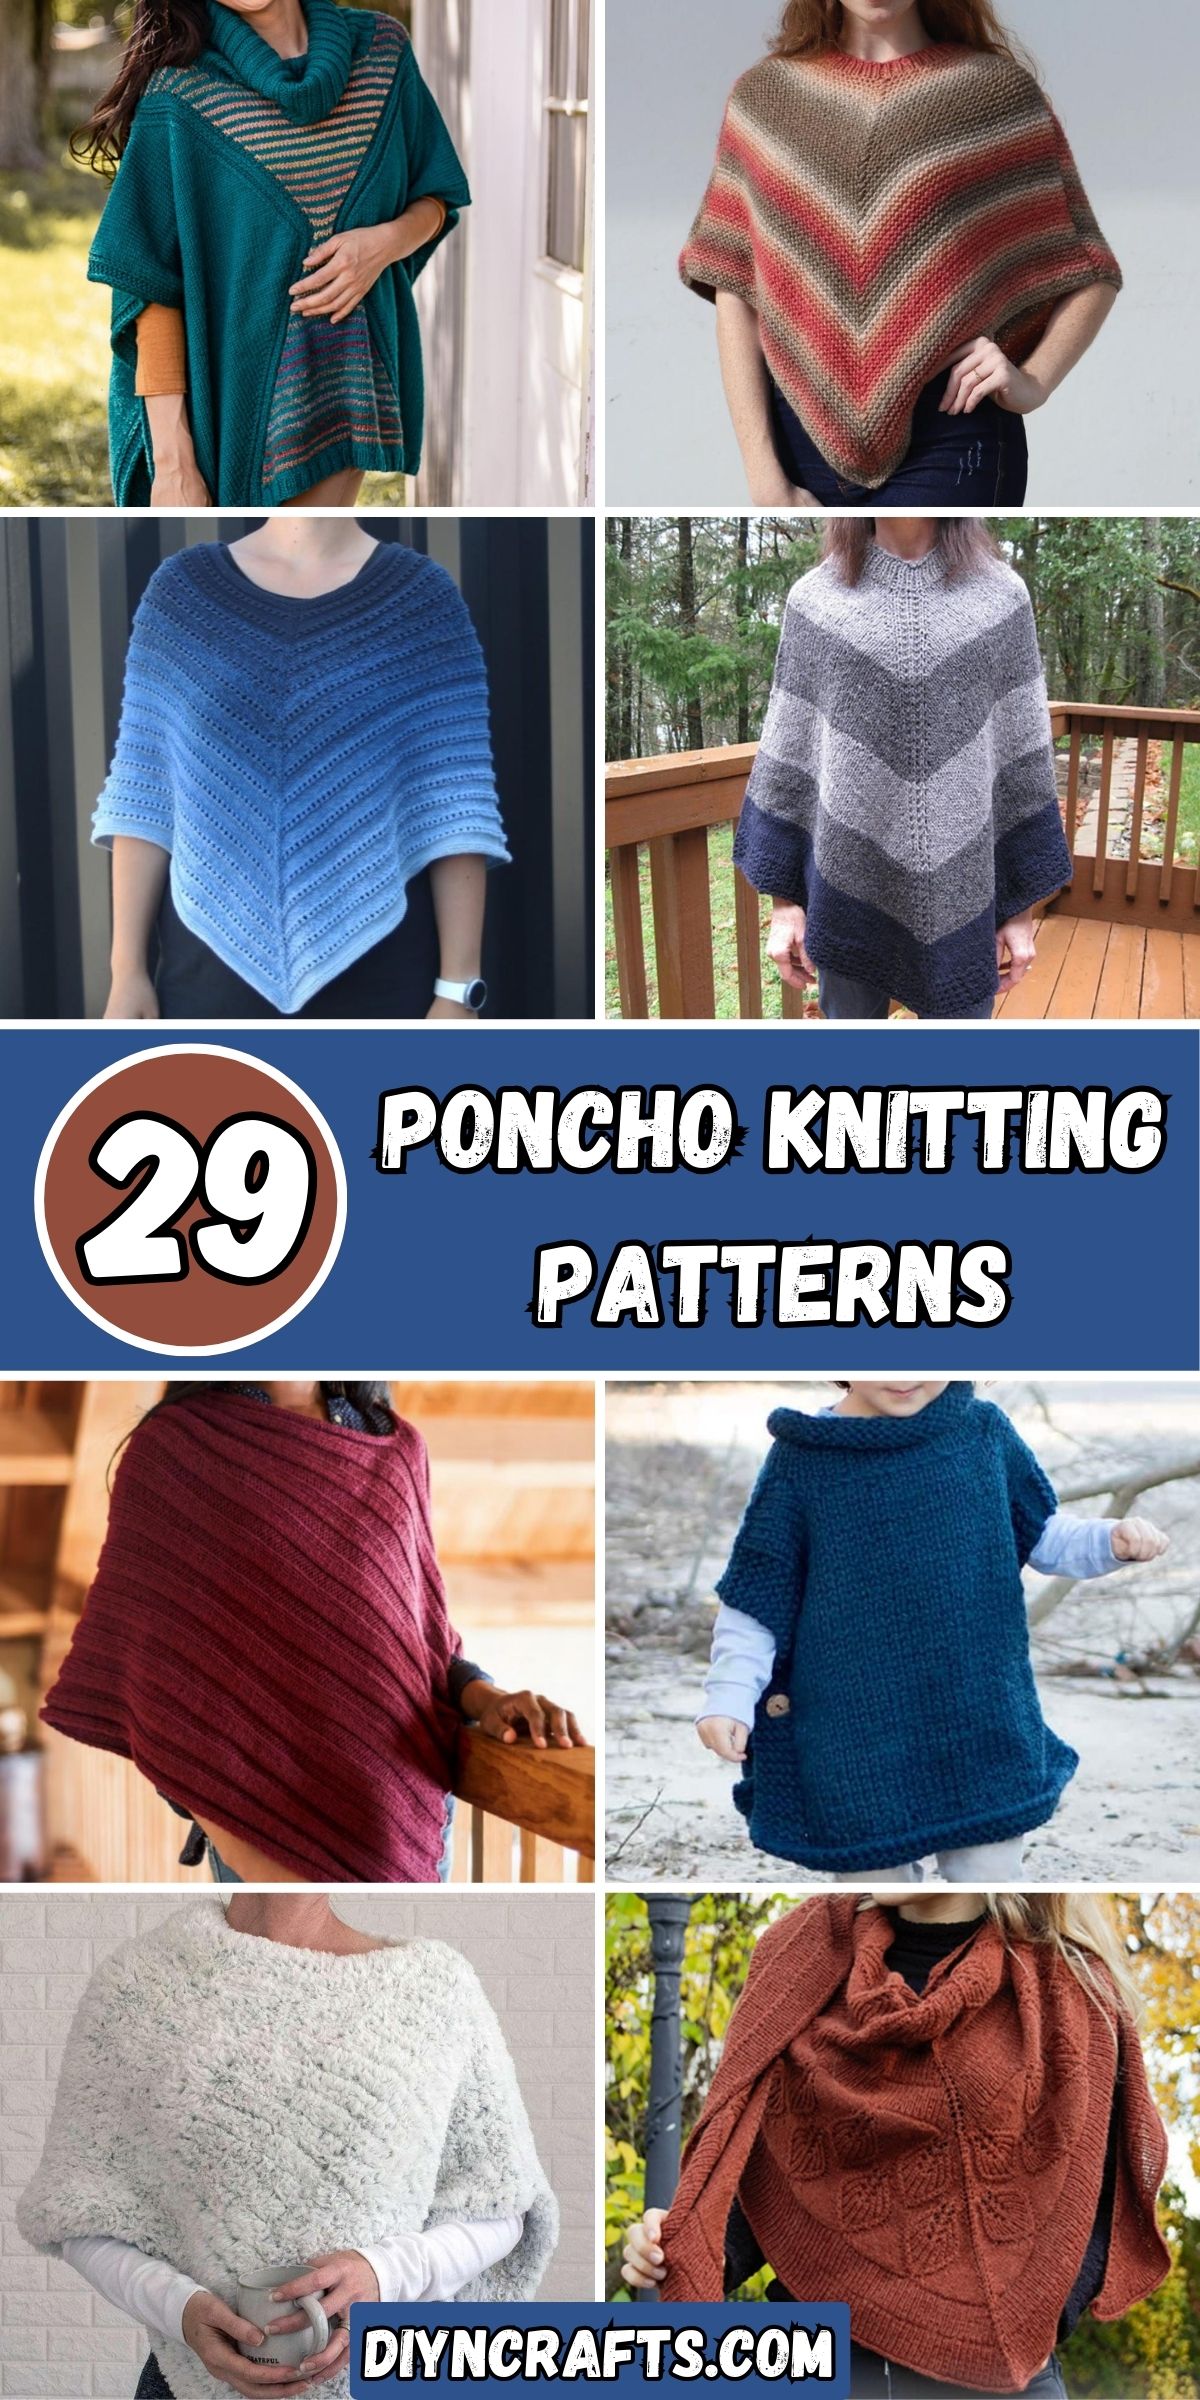 29 Poncho Knitting Patterns collage.